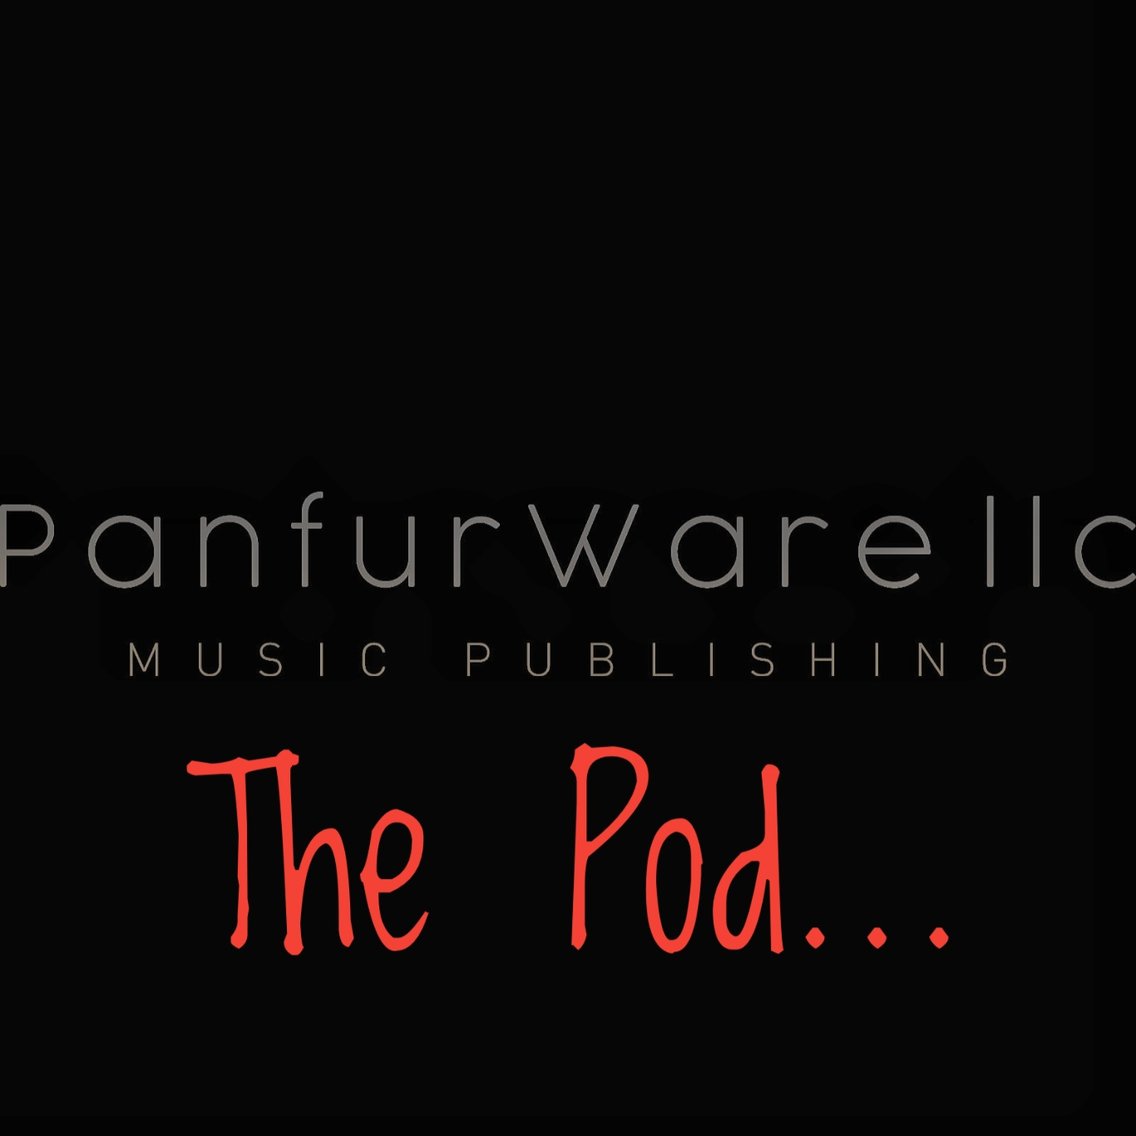 Panfurware LLC Music Publishing Podcast - Cover Image